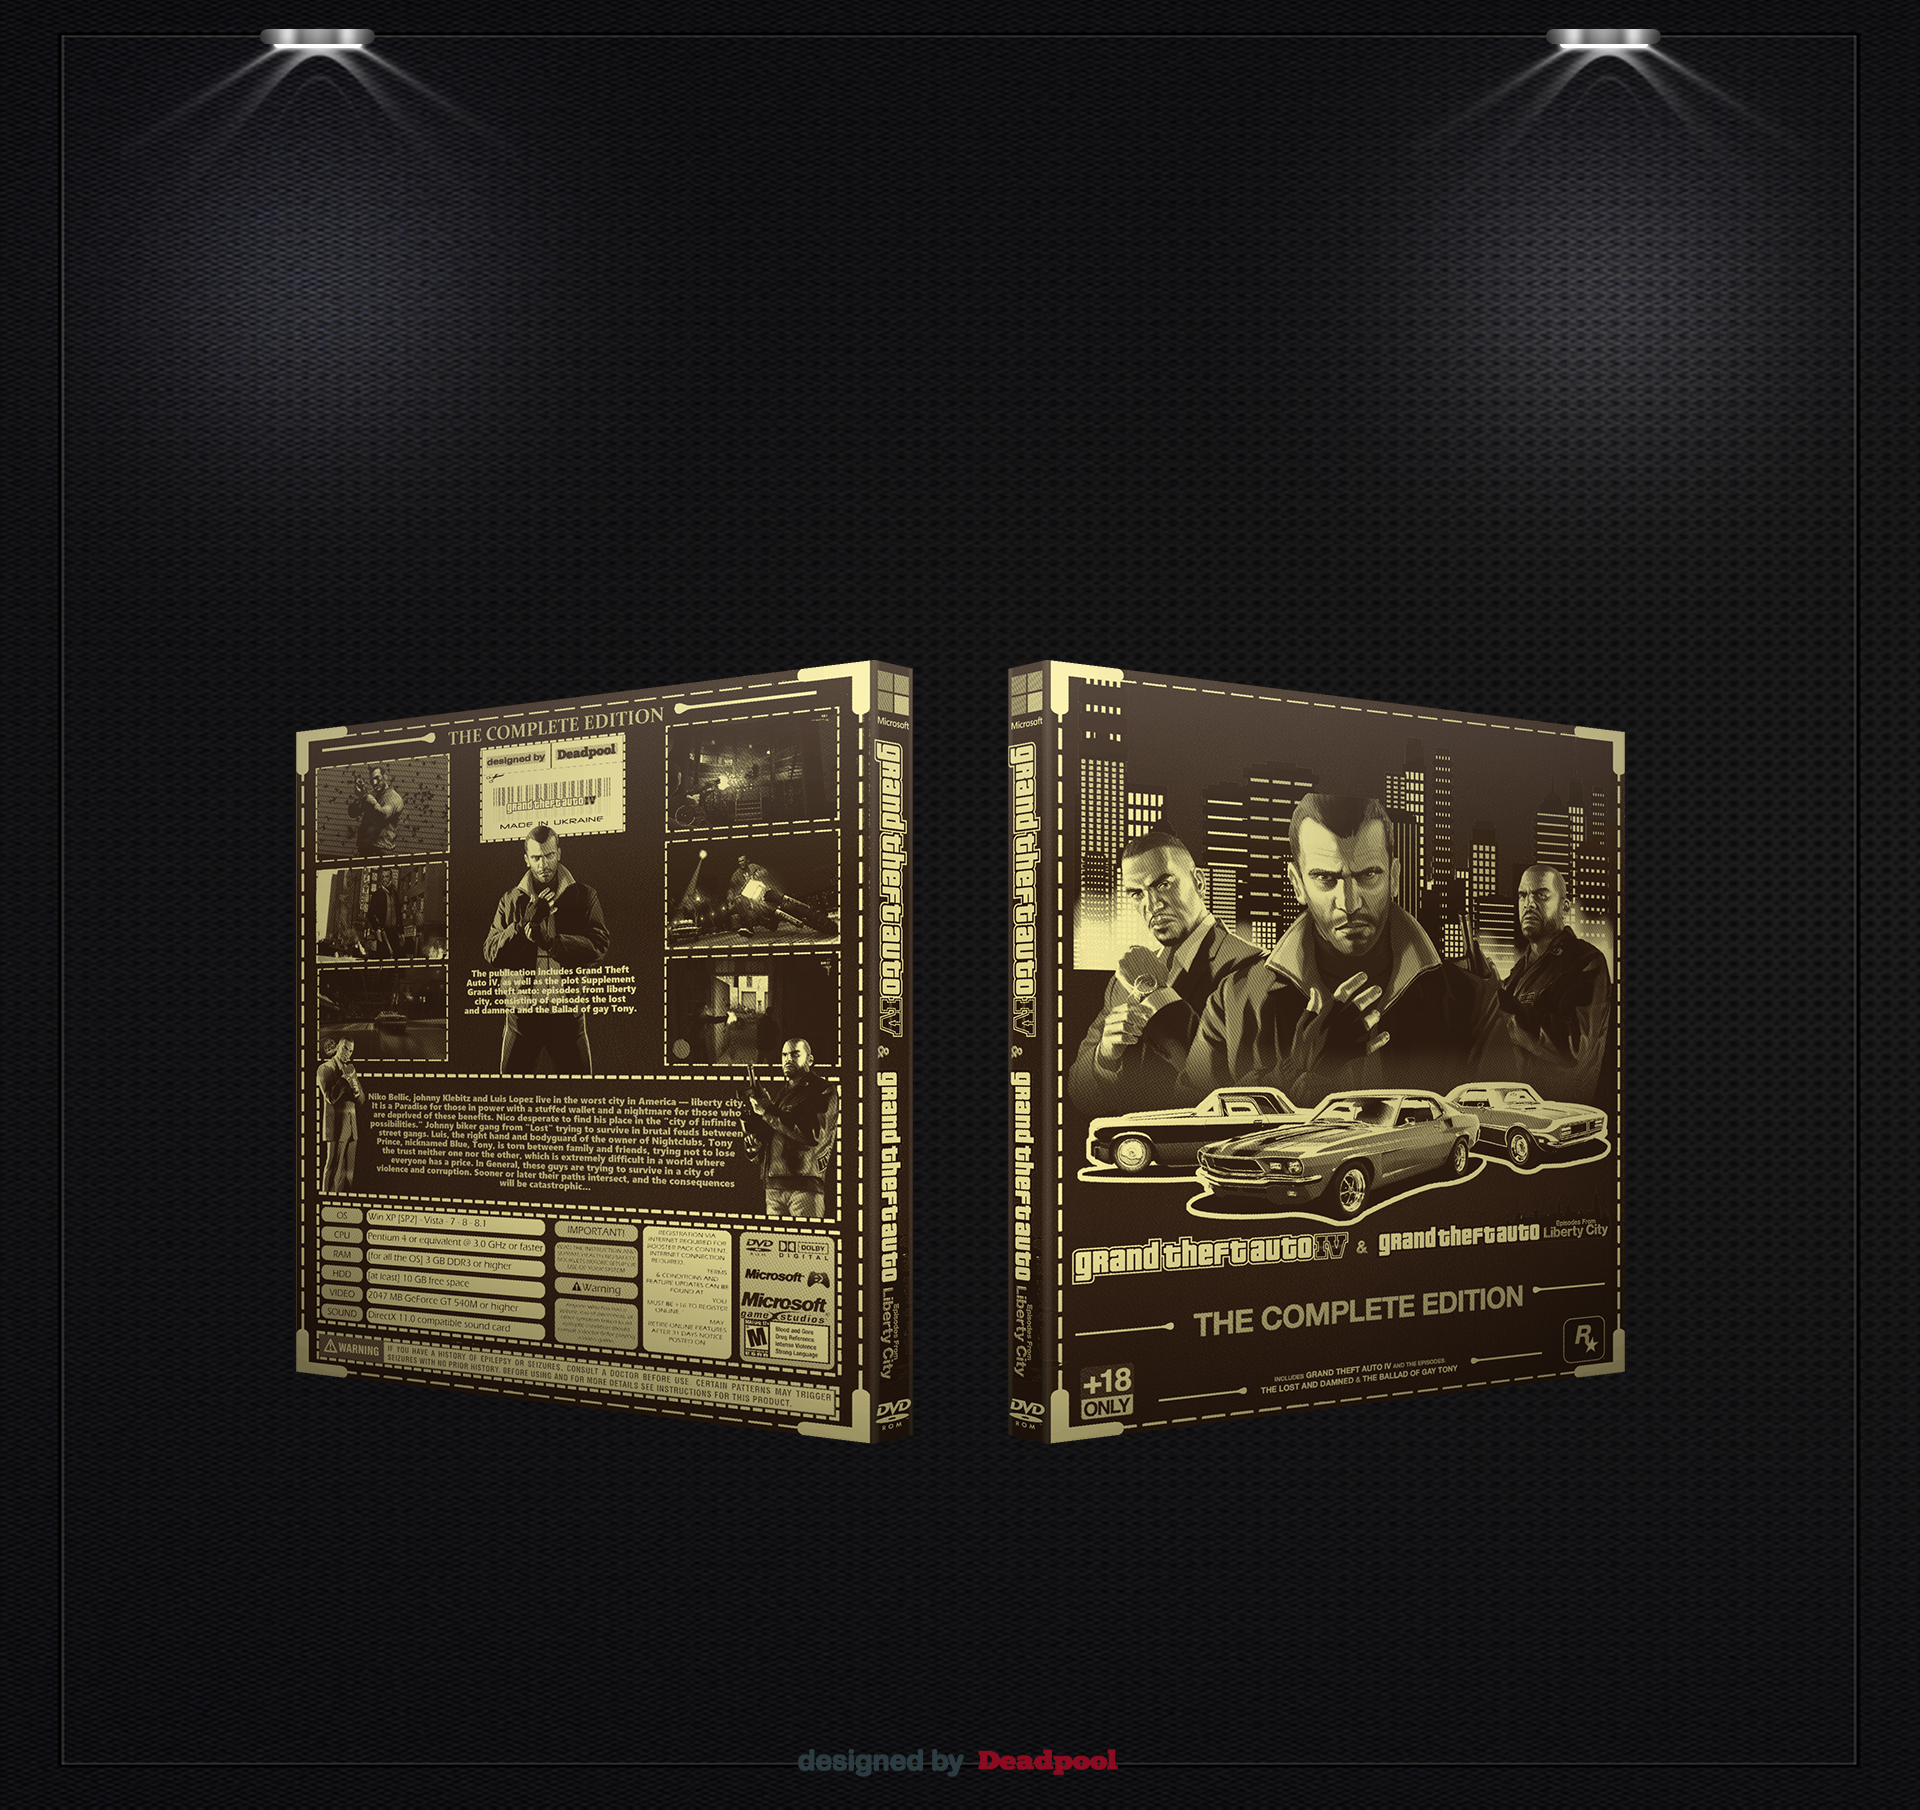 Grand Theft Auto IV: Complete Edition box cover